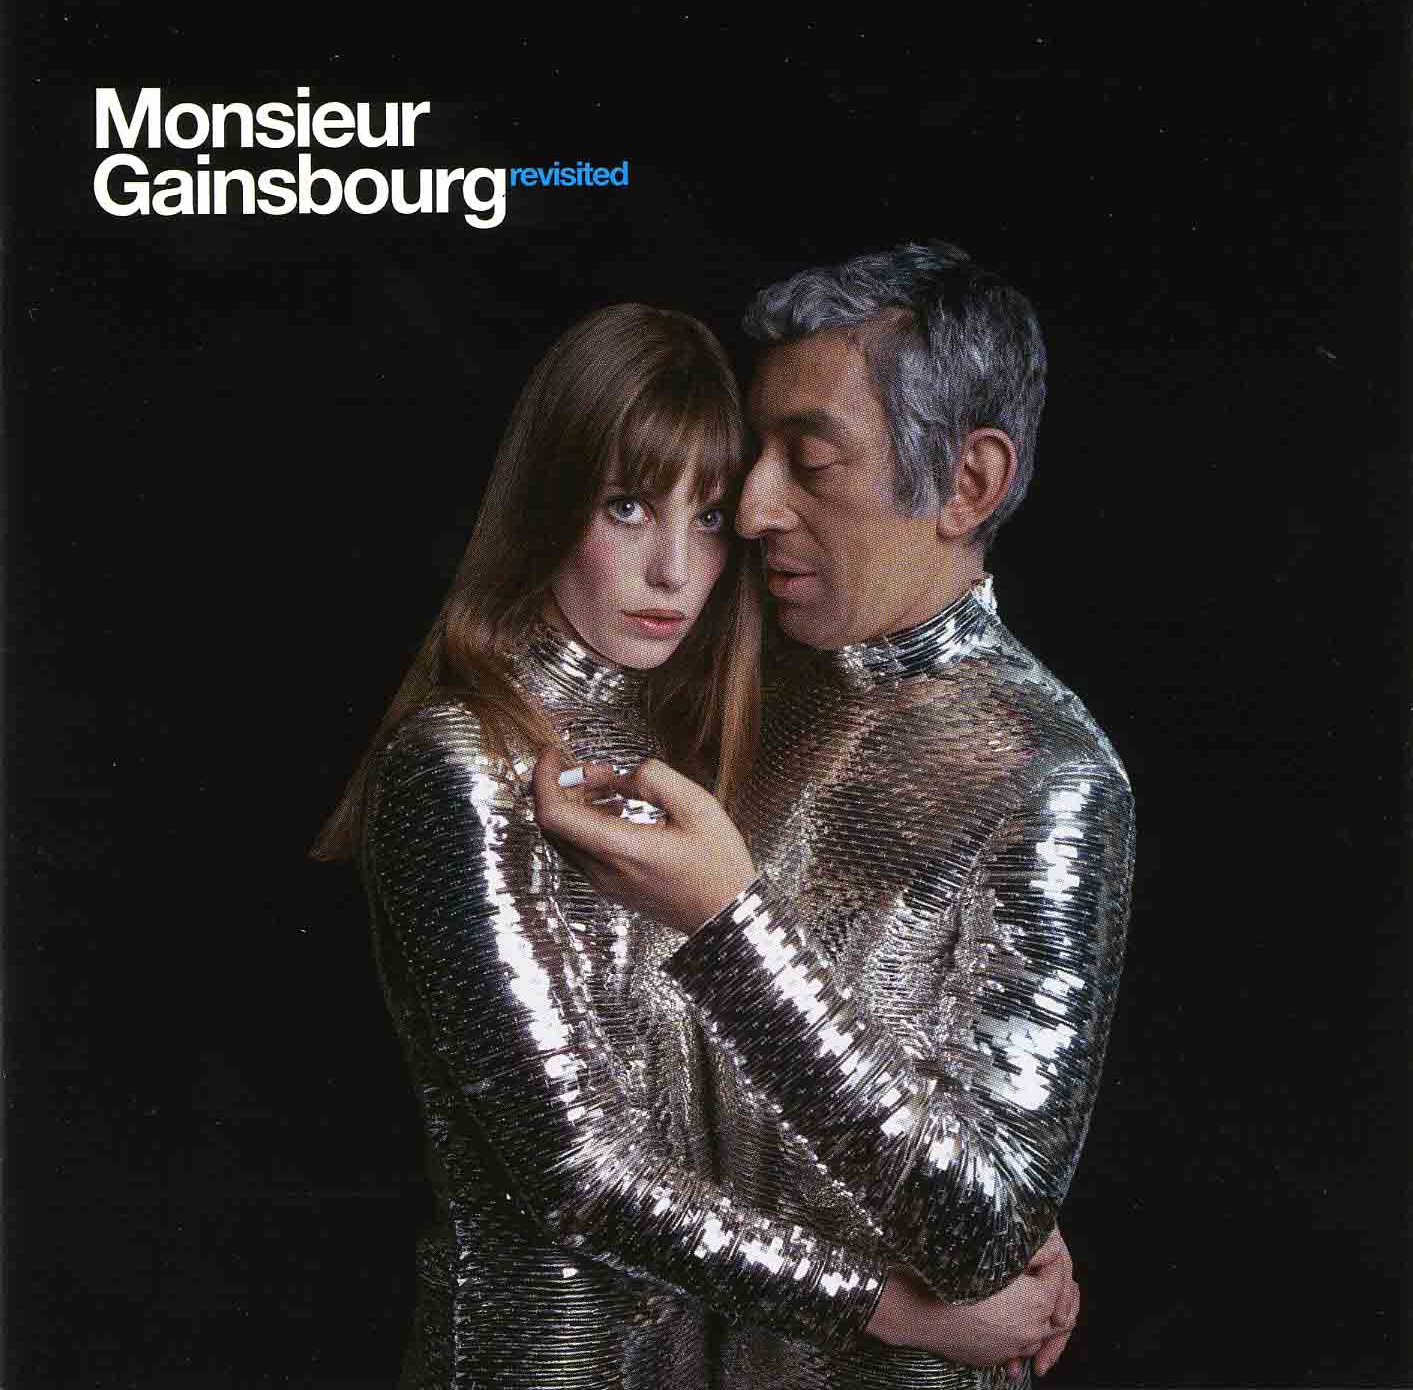 PORTADAS QUE SUPERAN A LAS DEL BLOG DE LAS PORTADAS MAS HORRIBLES - Página 2 A_Tribute_To_Serge_Gainsbourg_-_Monsieur_Gainsbourg_Revisited_-_Front